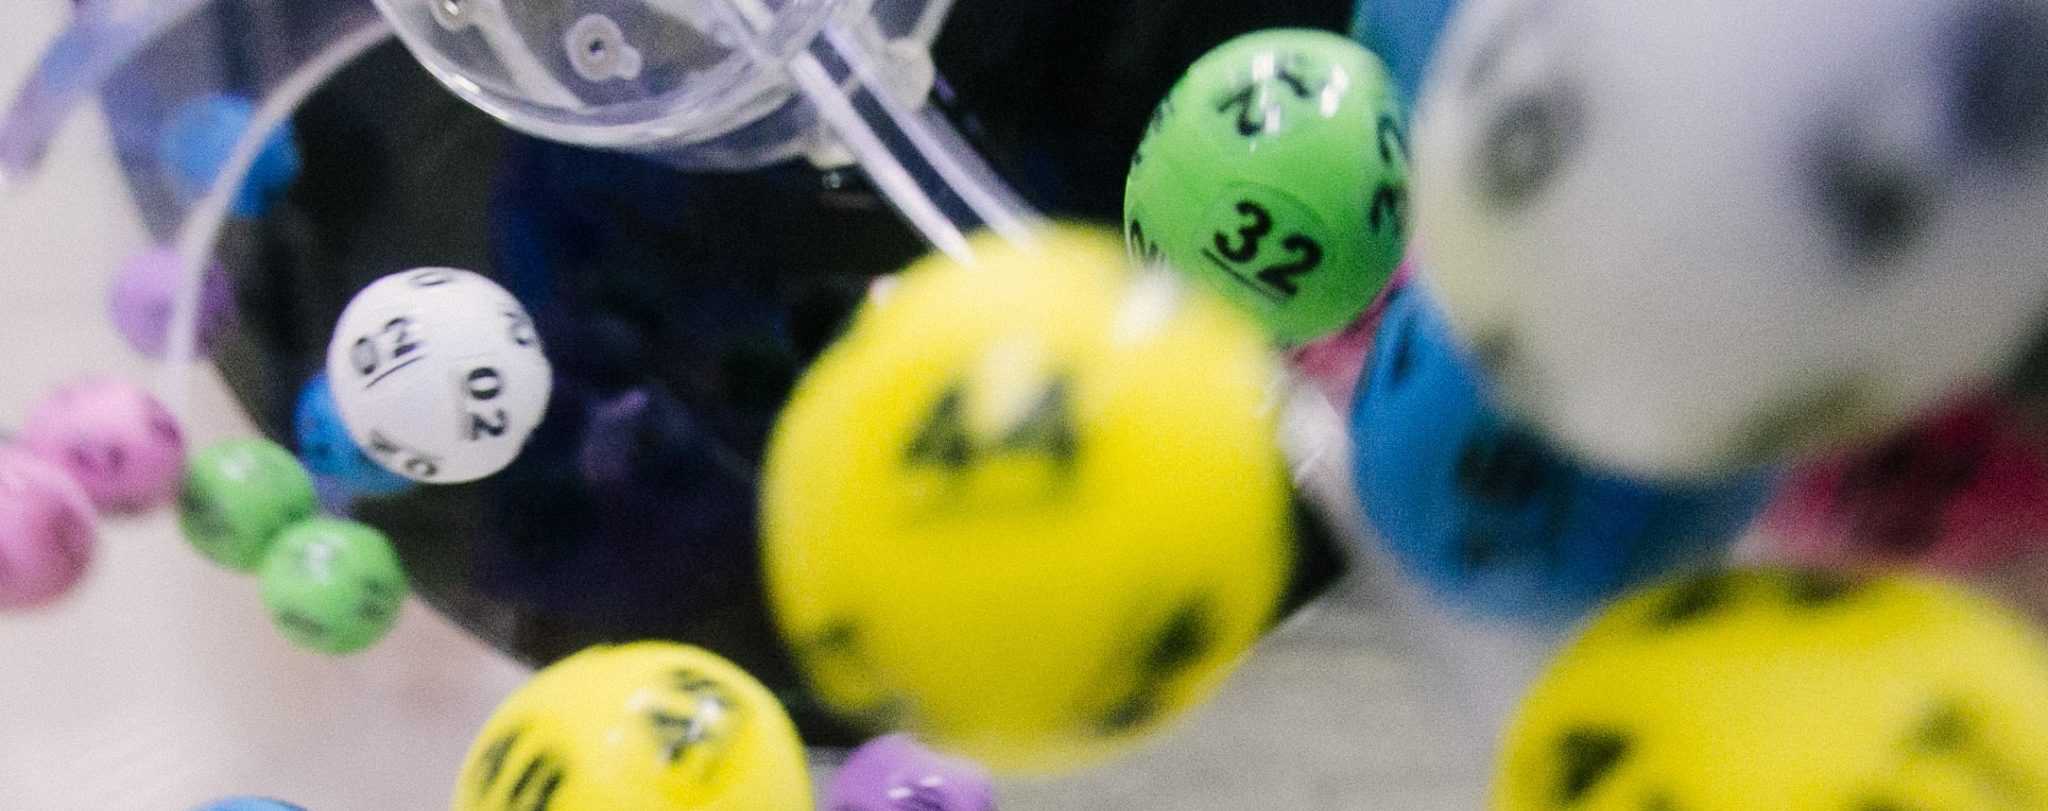 Lotto Winning Balls